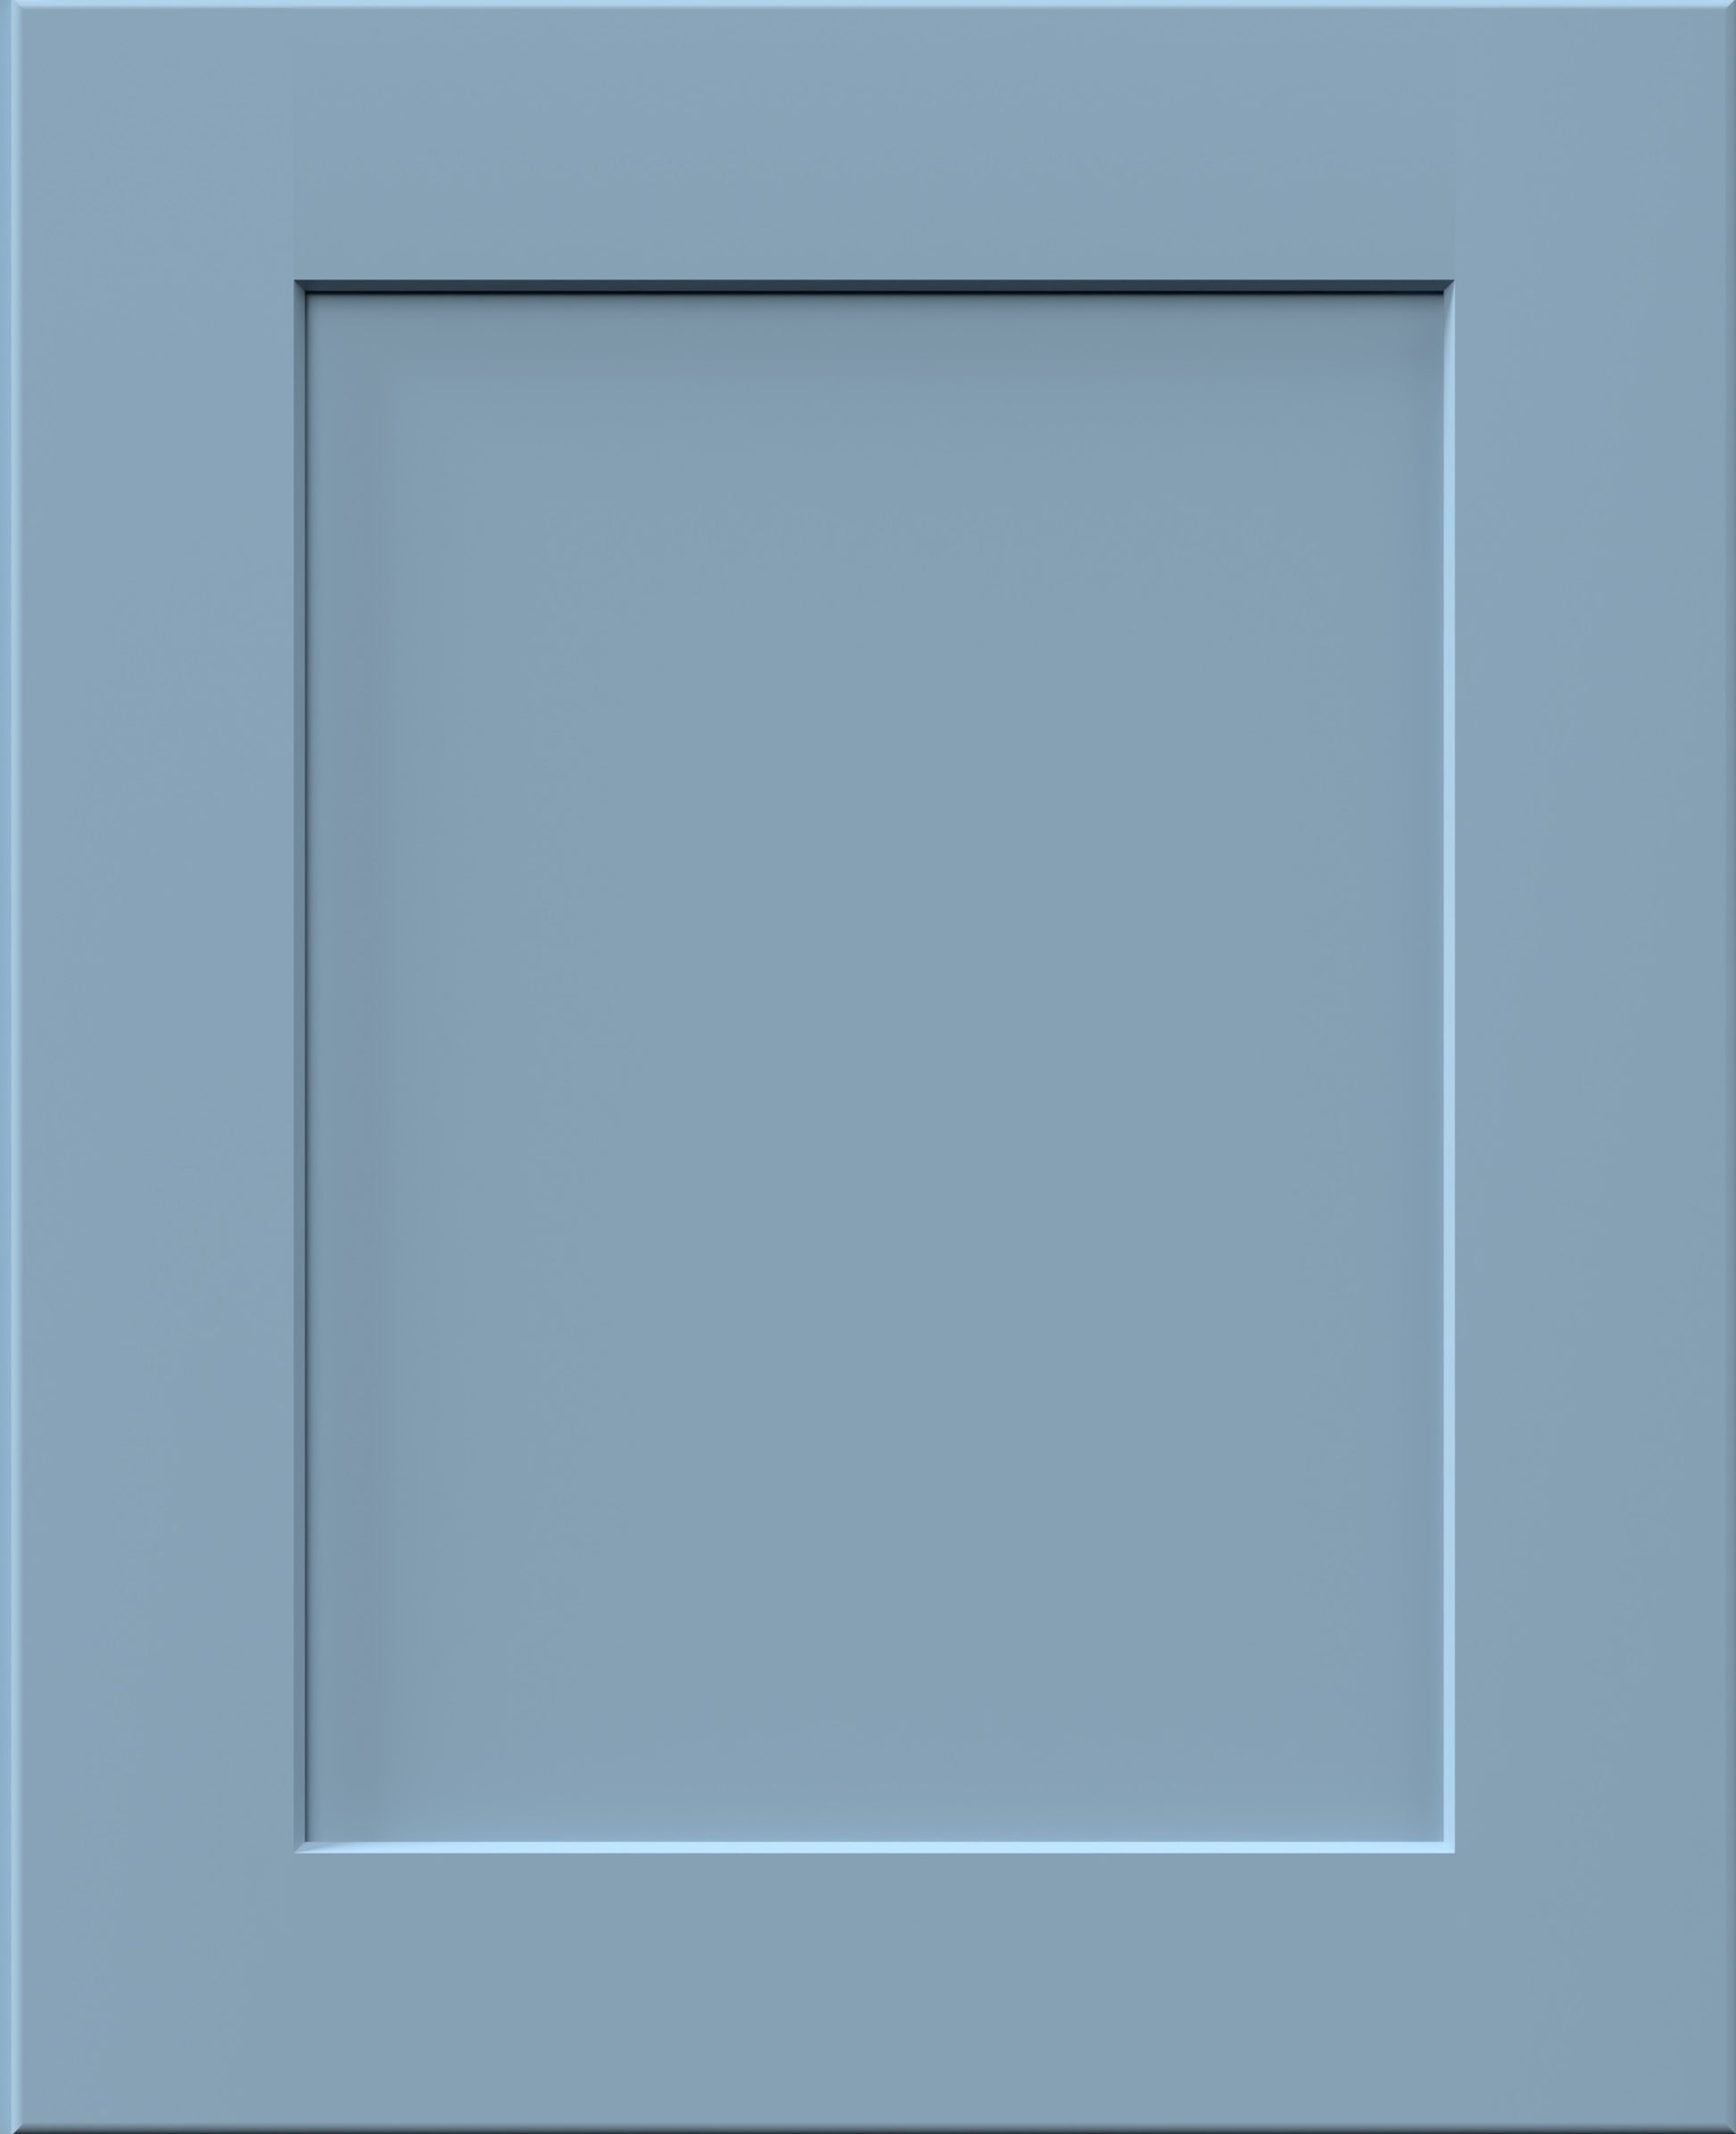 Fabuwood Galaxy Ocean Blue Small Sample Door- Shaker, light blue cabinet color. 